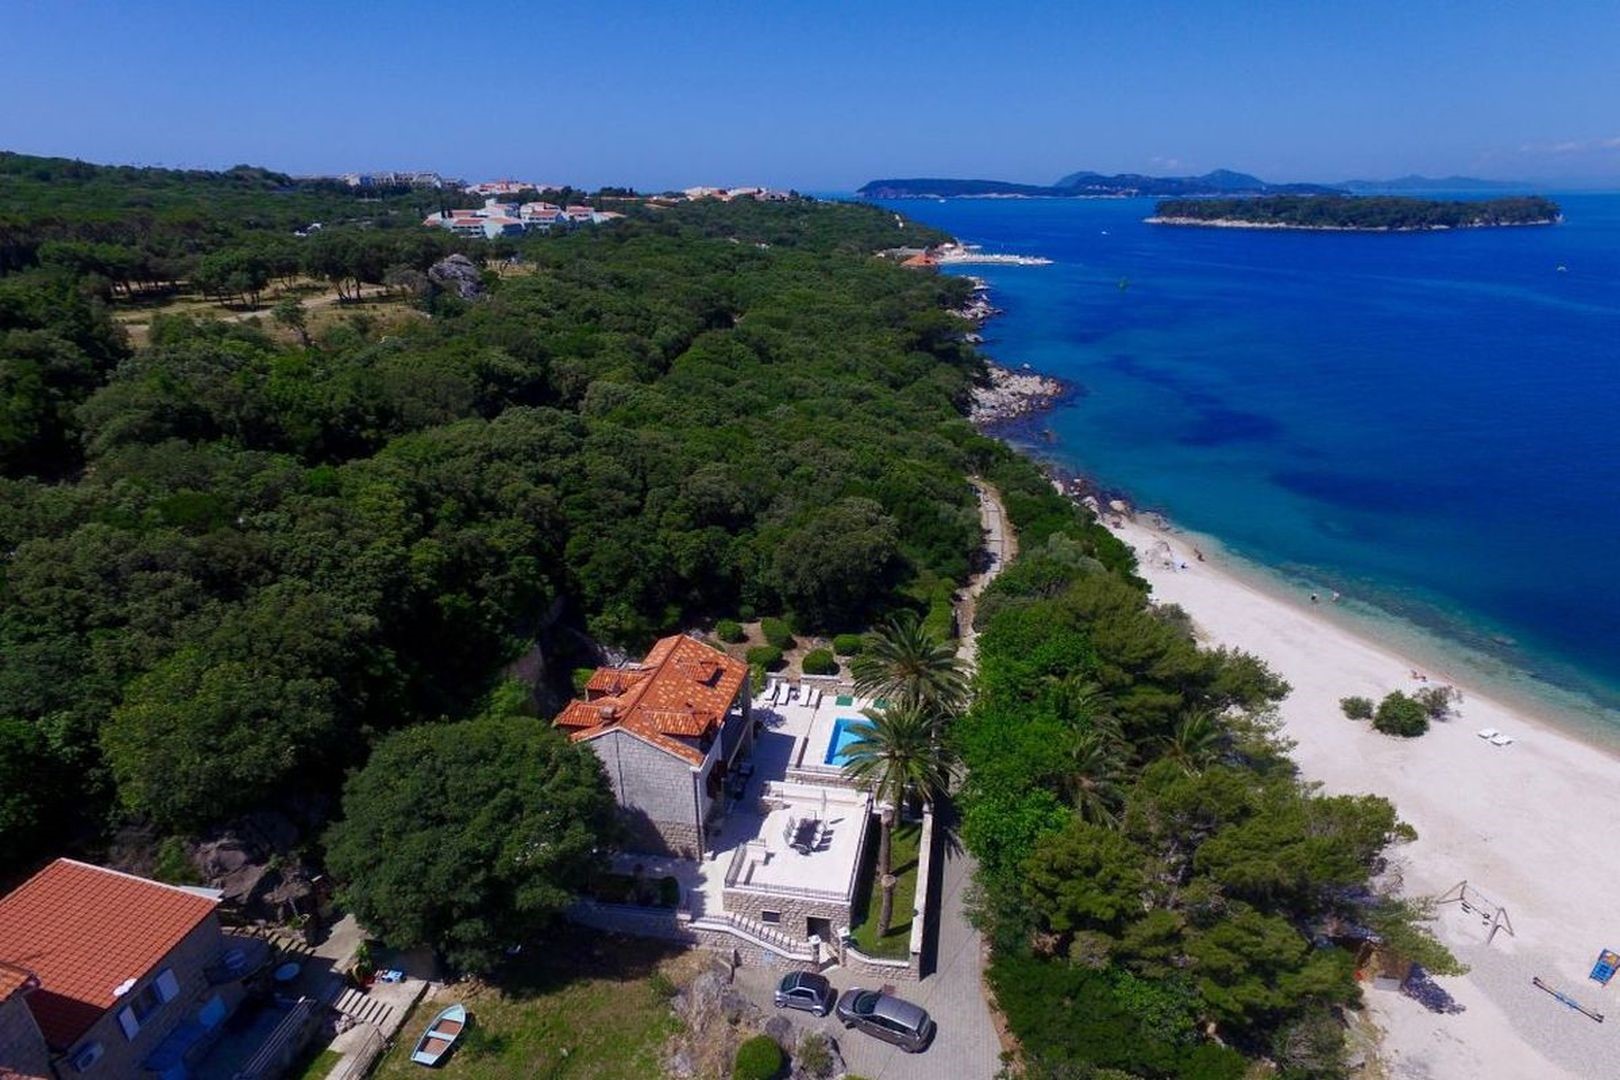 Blizina luksuzne vile Dubrovnik Oasis do pješčane plaže